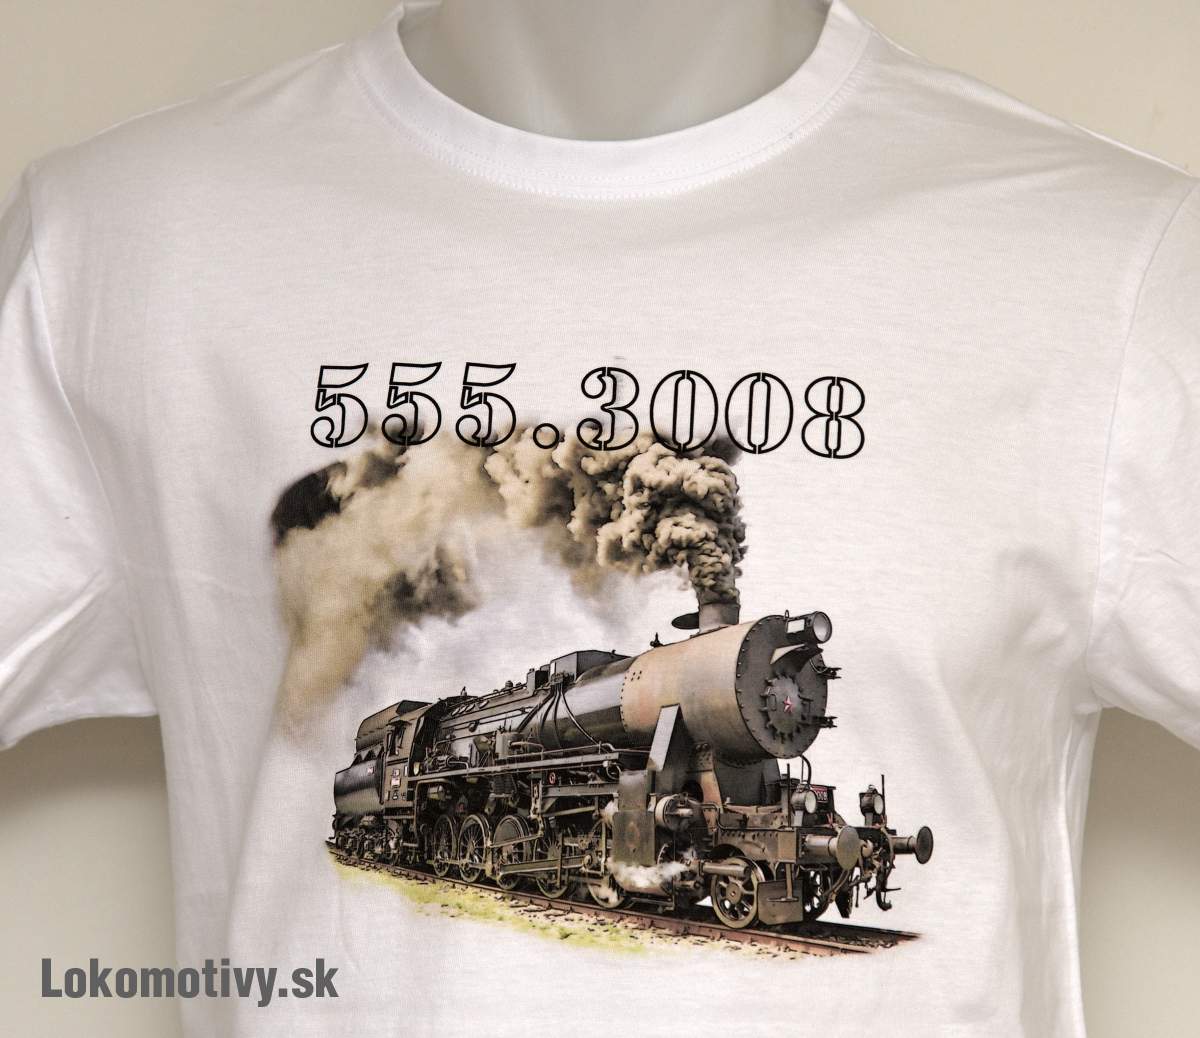 Tričko s lokomotívou 555.3008 Mazutka